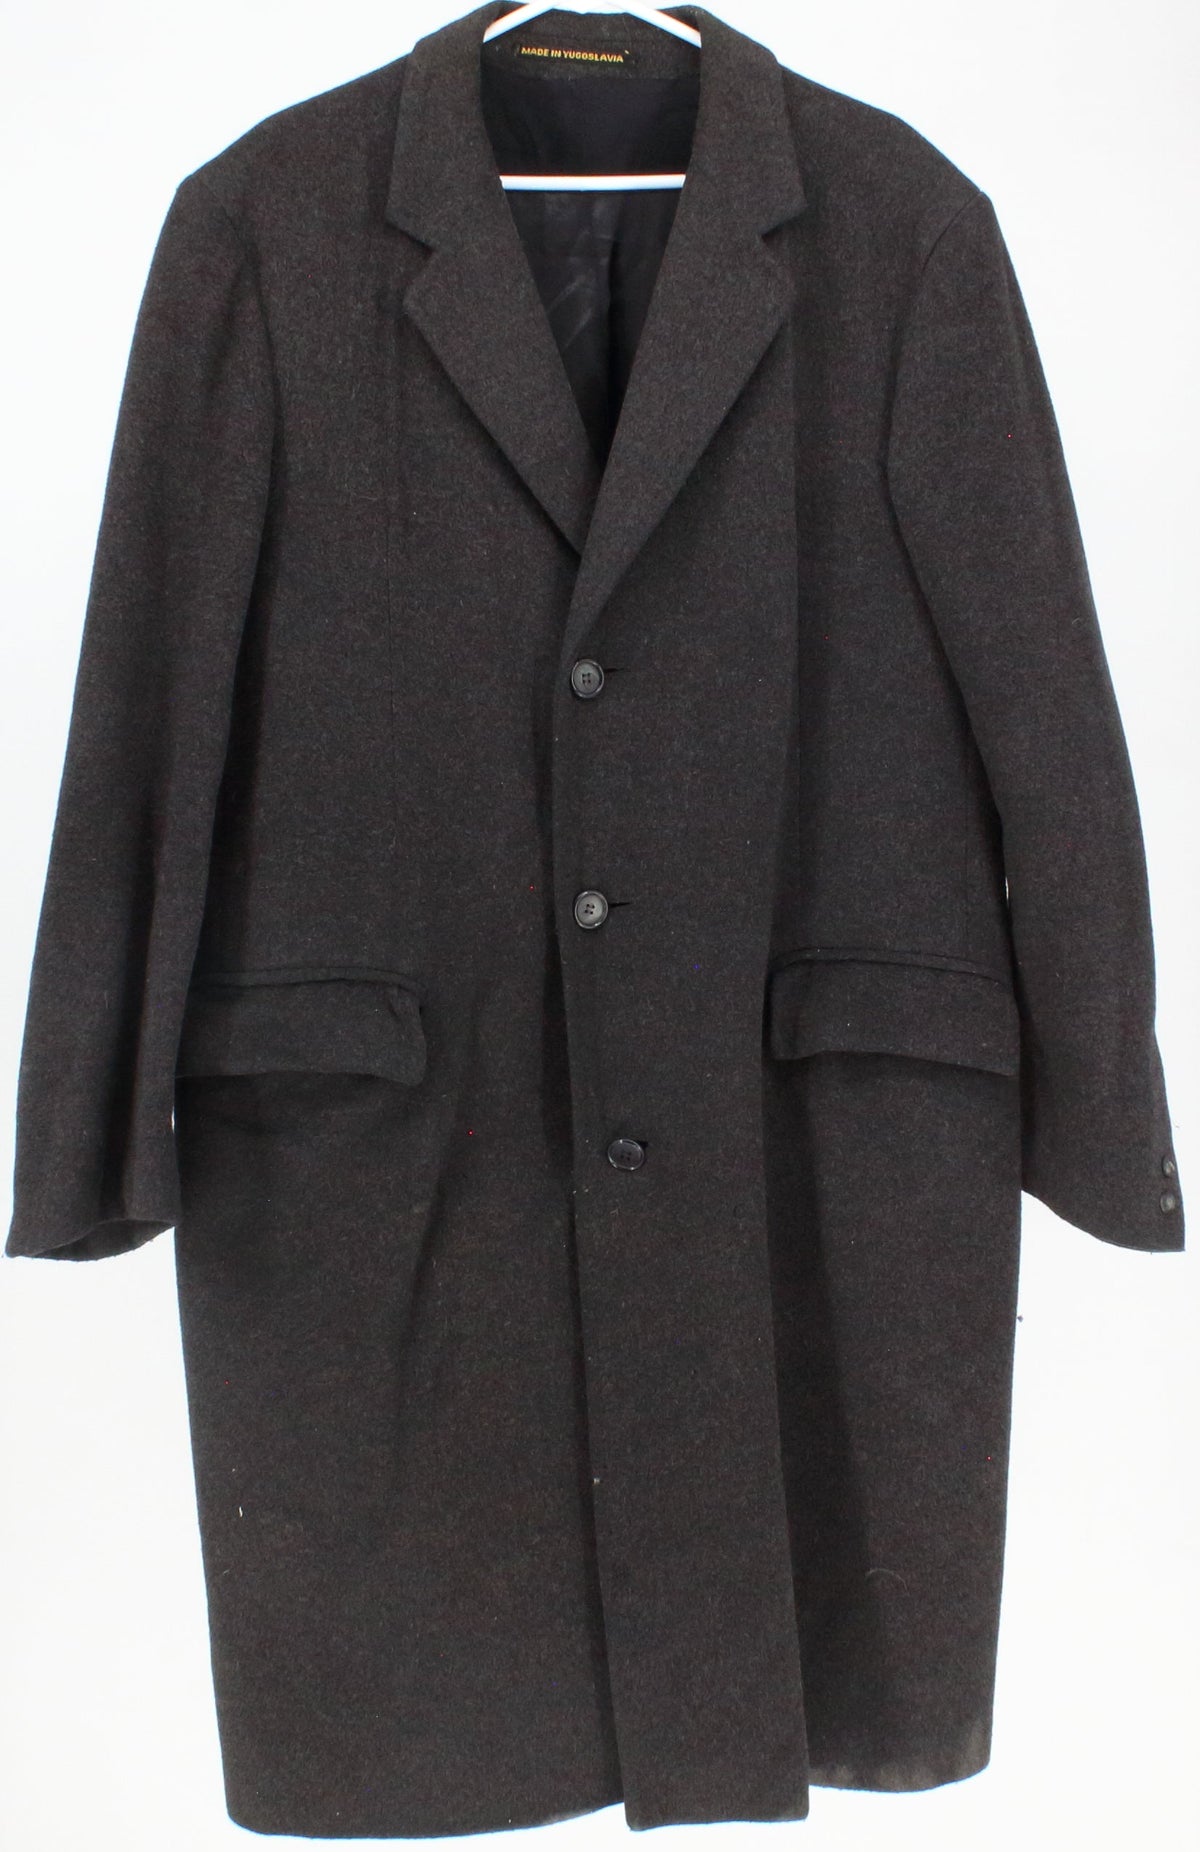 Made in Yugoslavia Charcoal Grey Men's Wool Coat